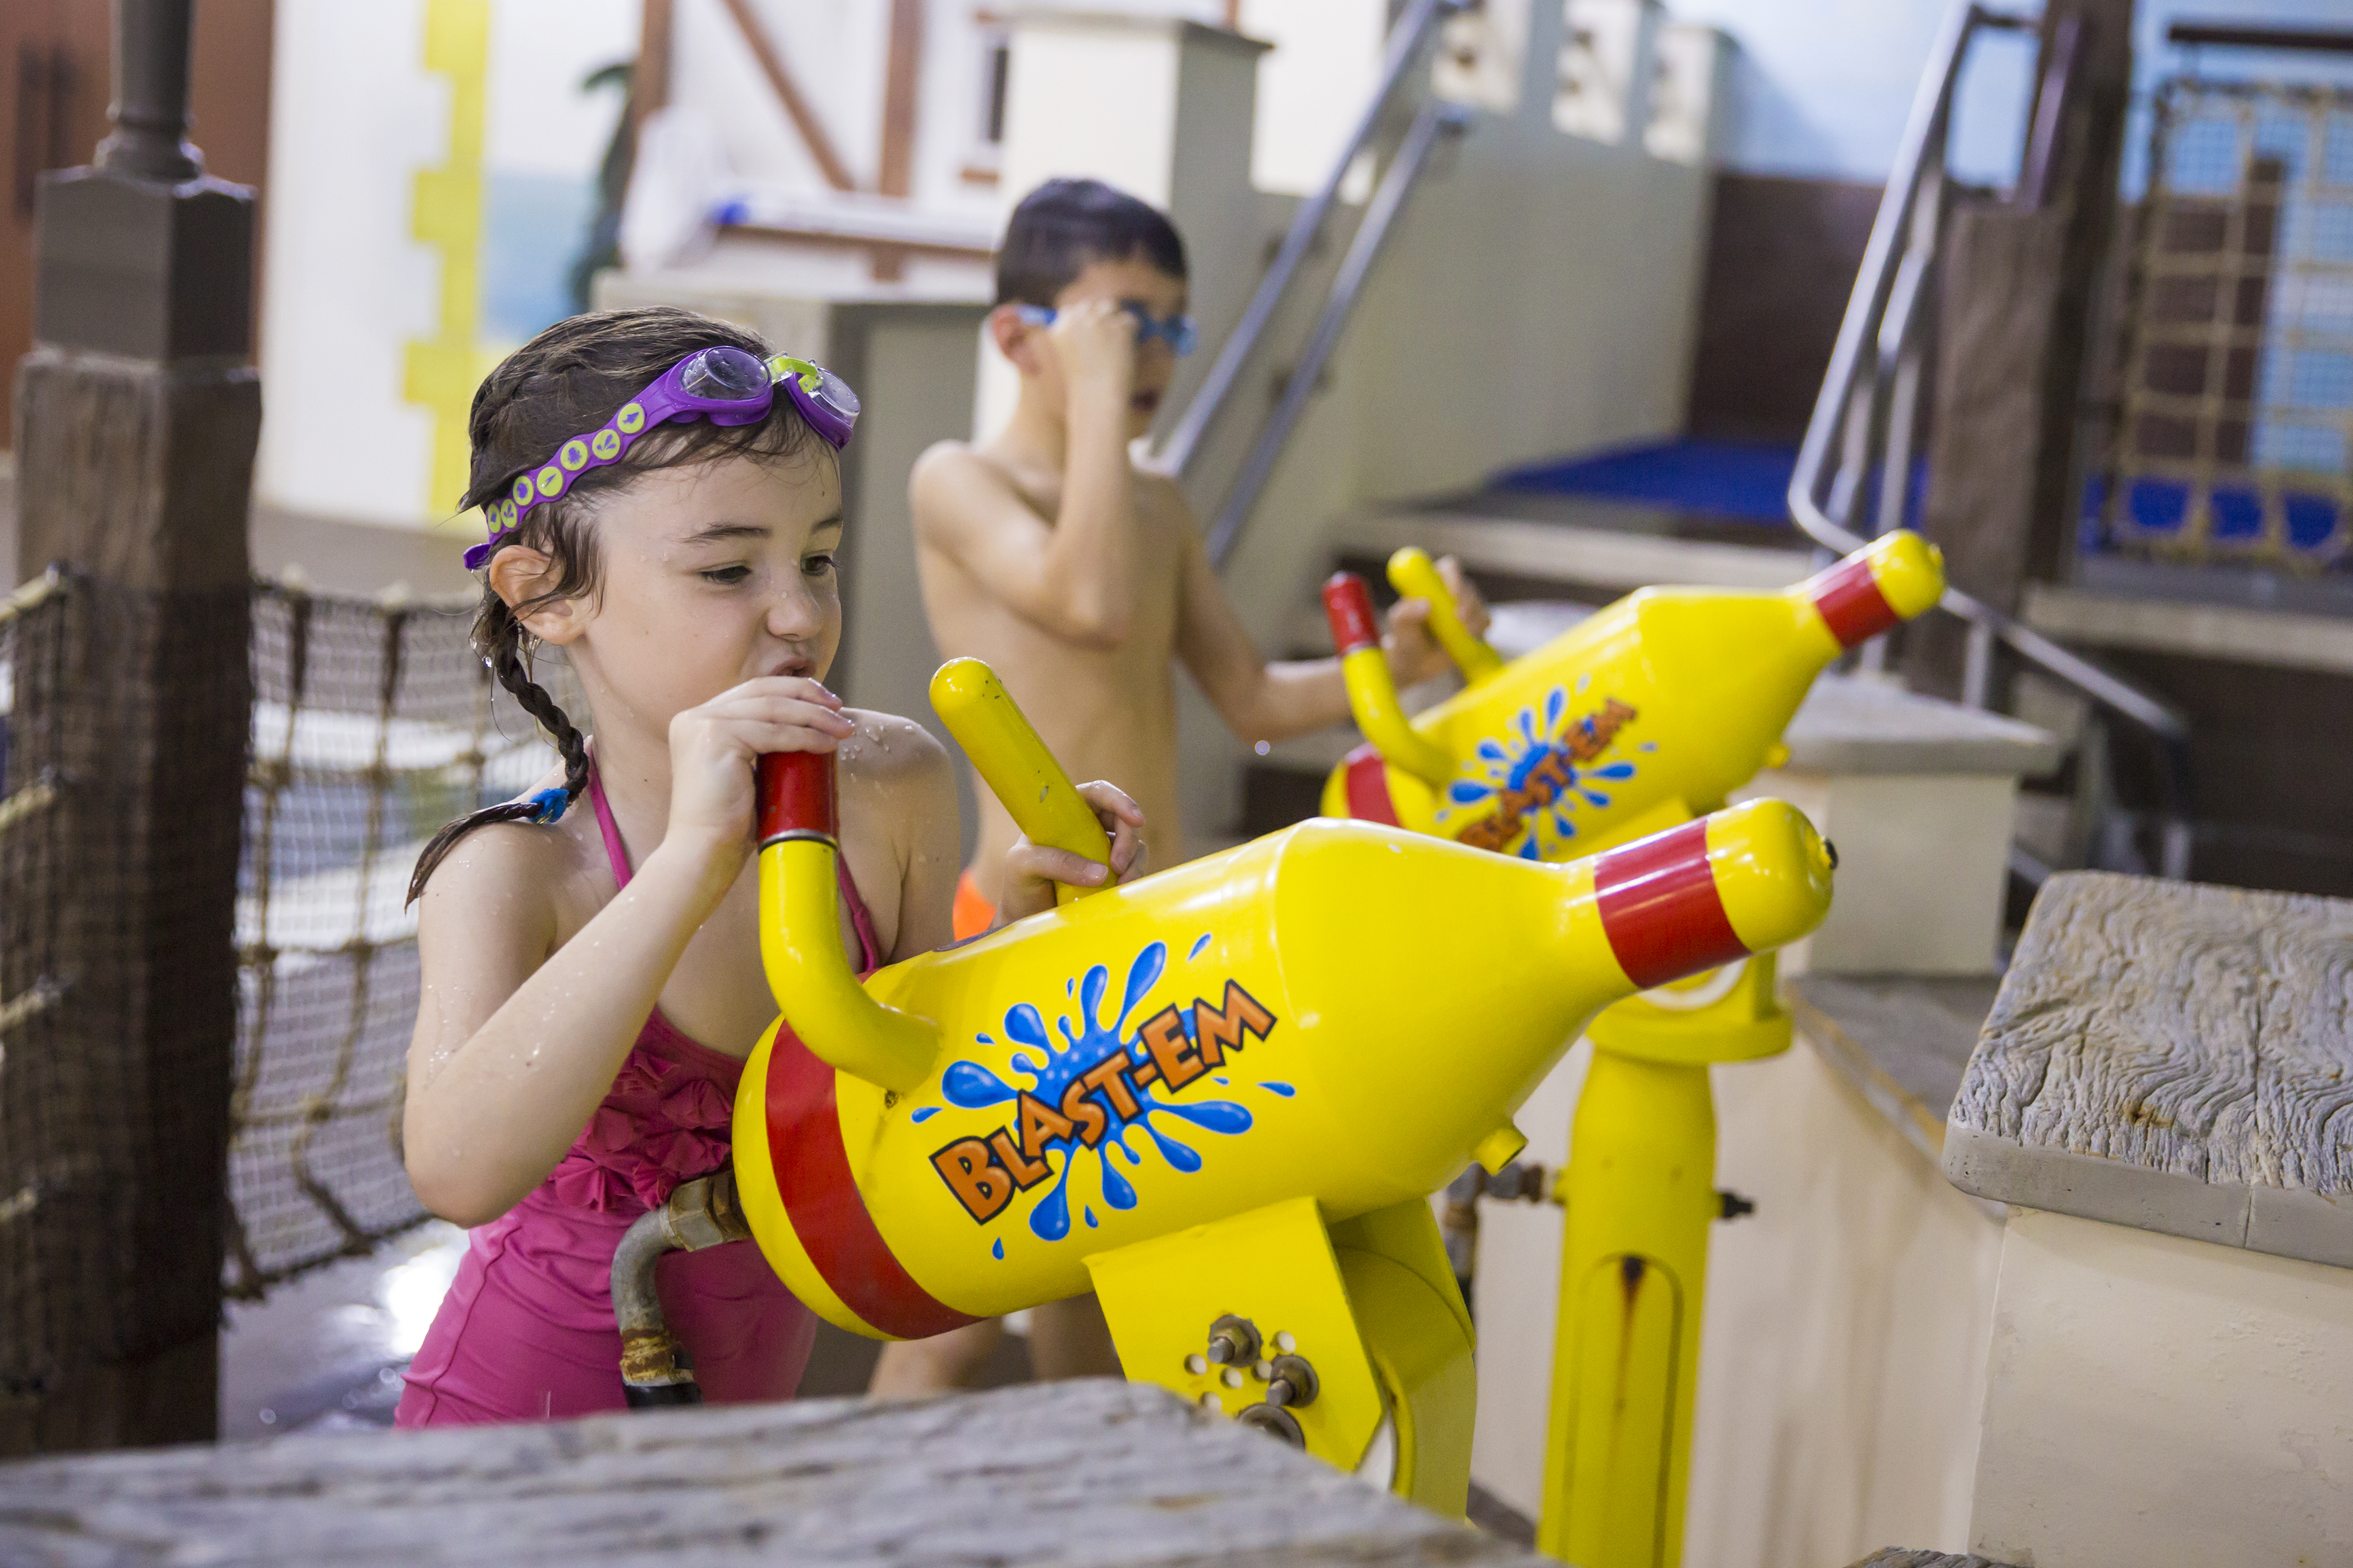 Children enjoying the Pirate Themed Swimming Pool at the LEGOLAND Resort Hotel